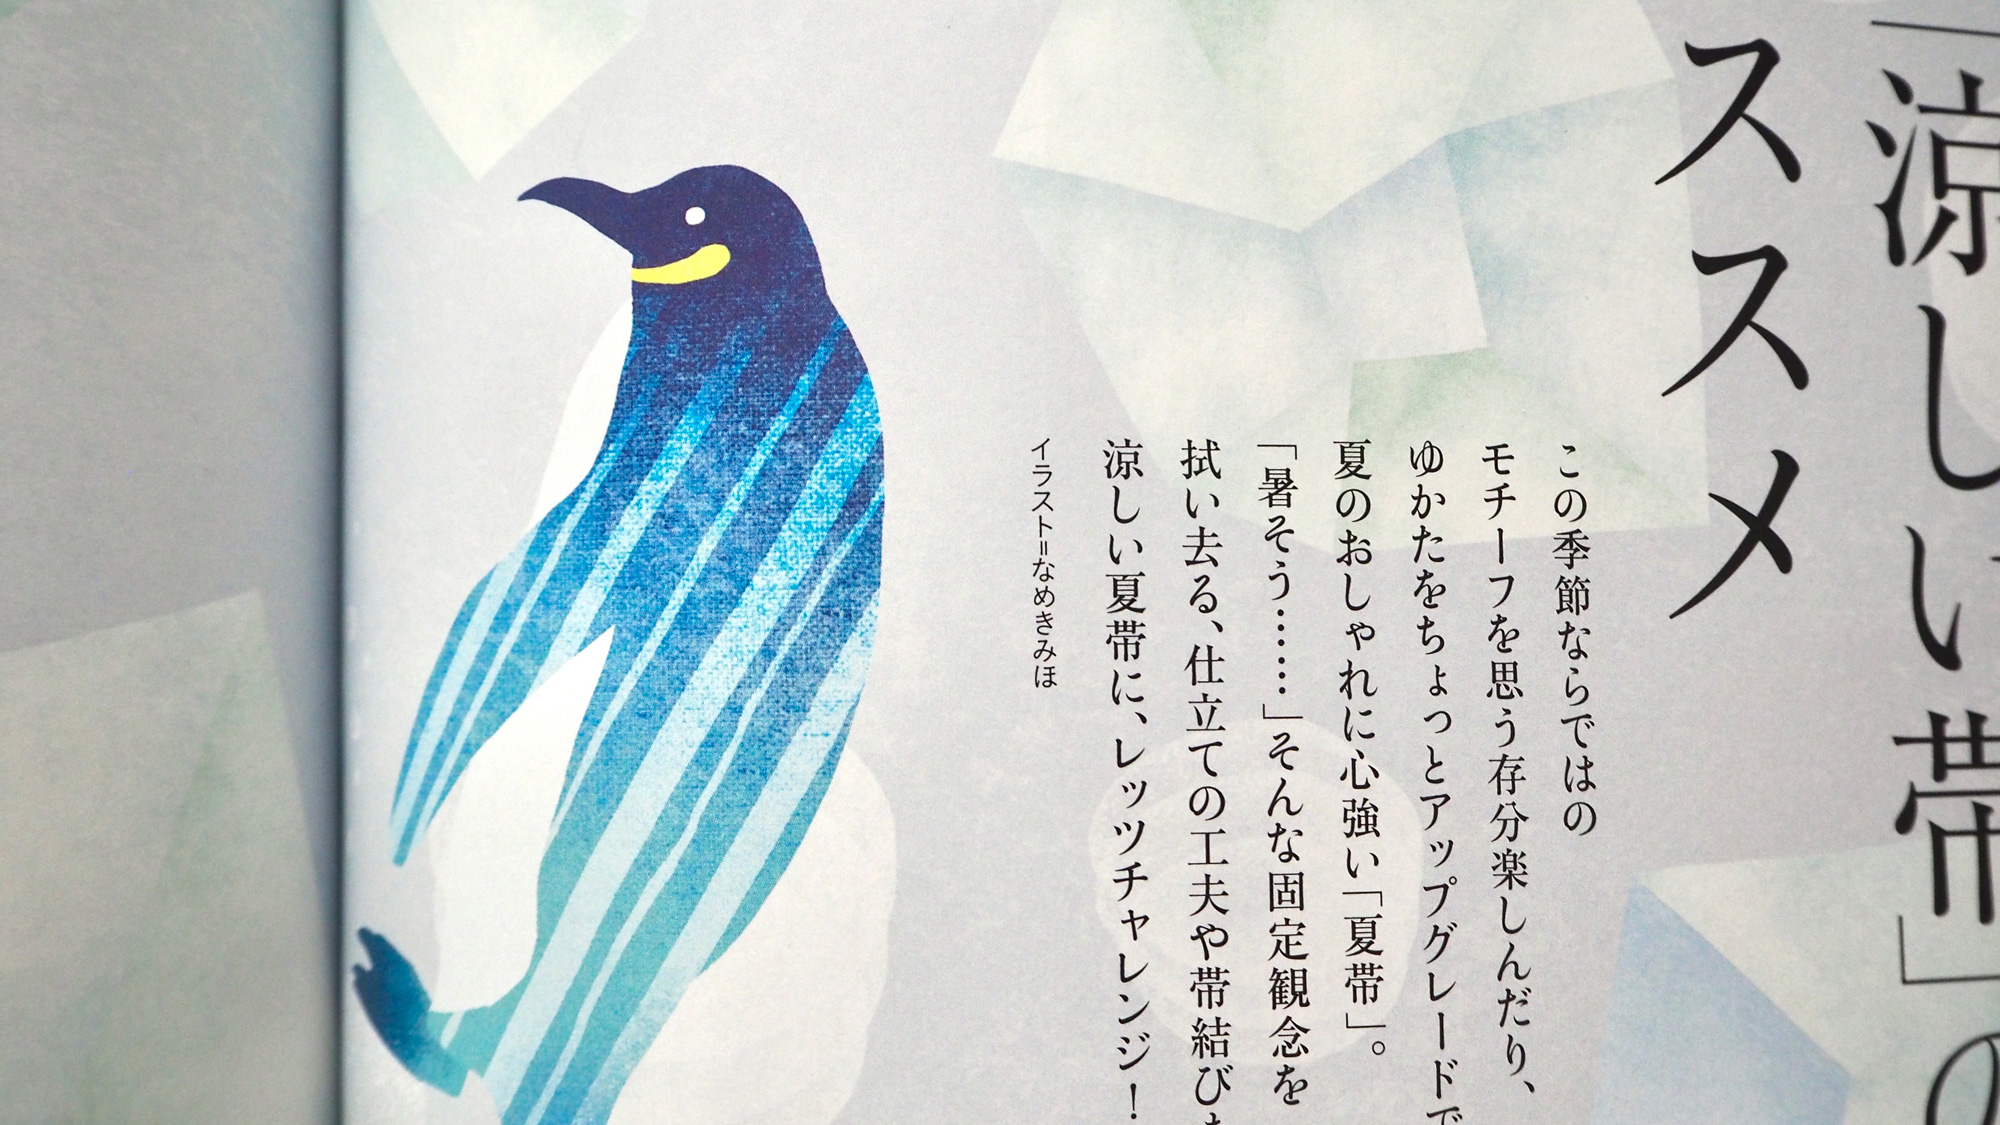 七緒vol 62夏号 特集扉絵 06 Miho Nameki Illustration Design